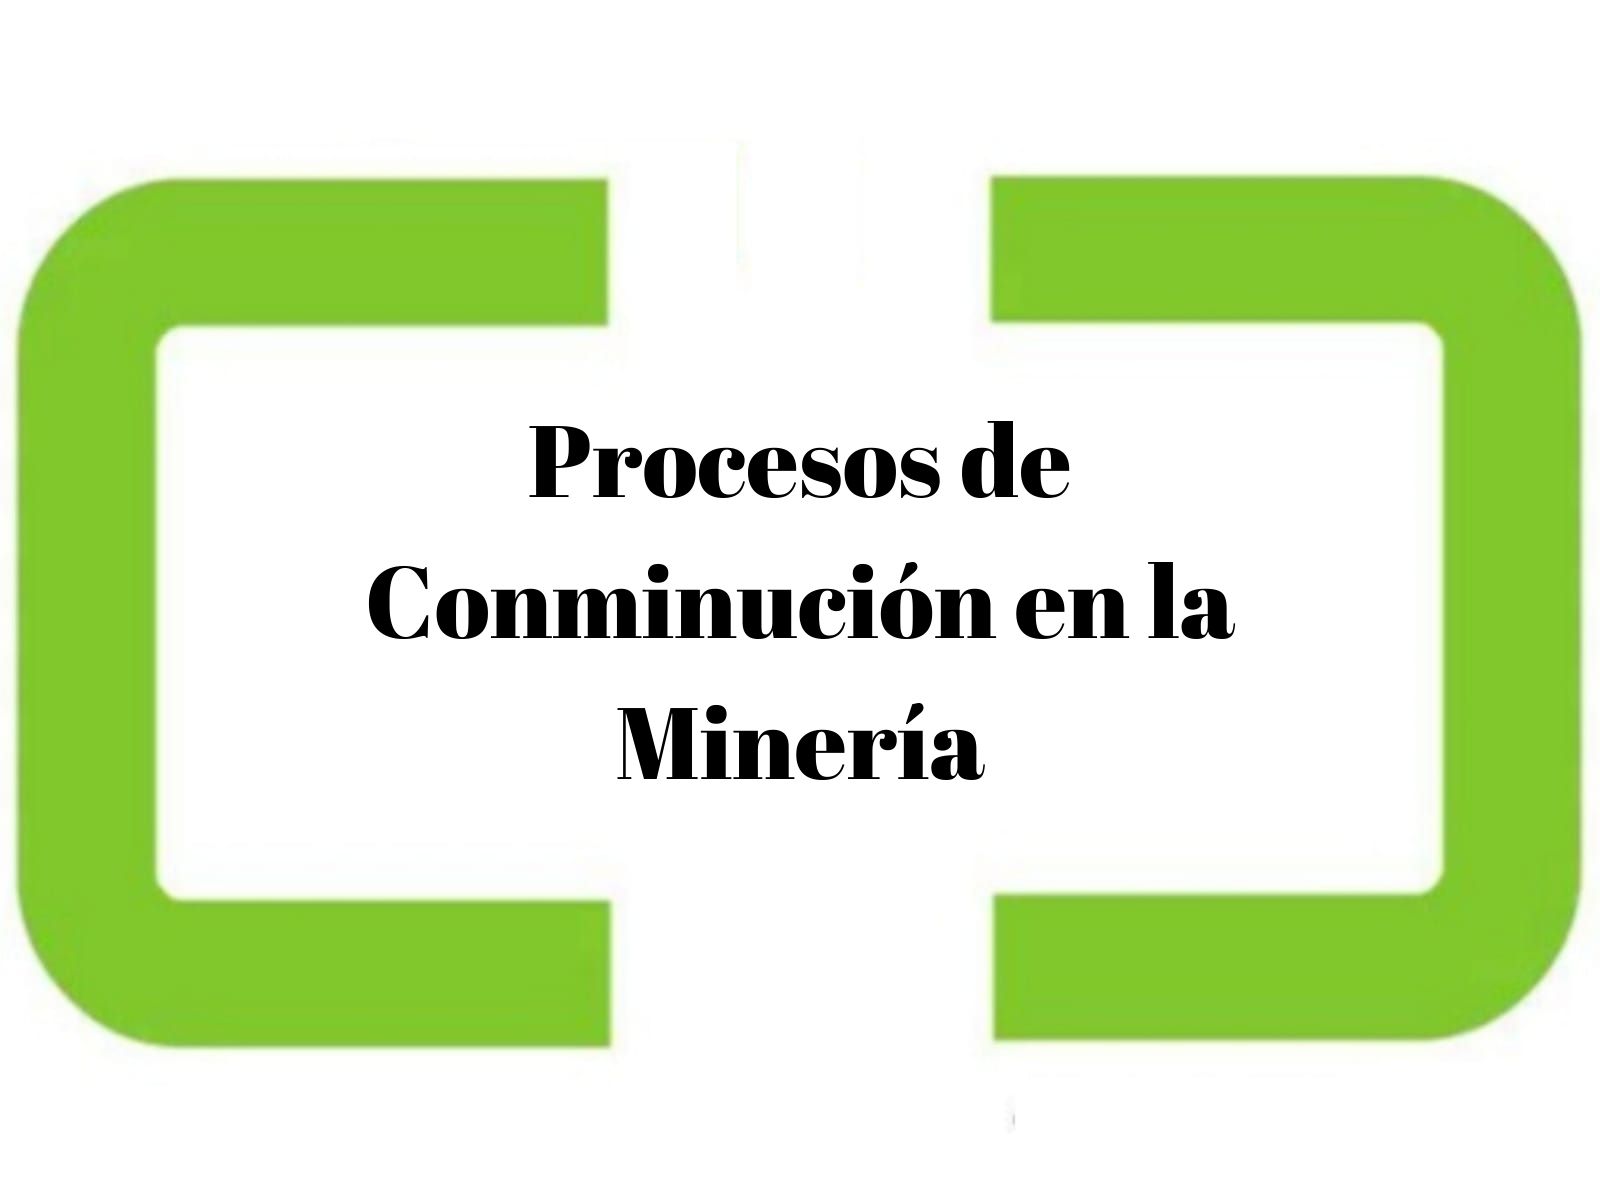 Procesos de Conminución en la Minería